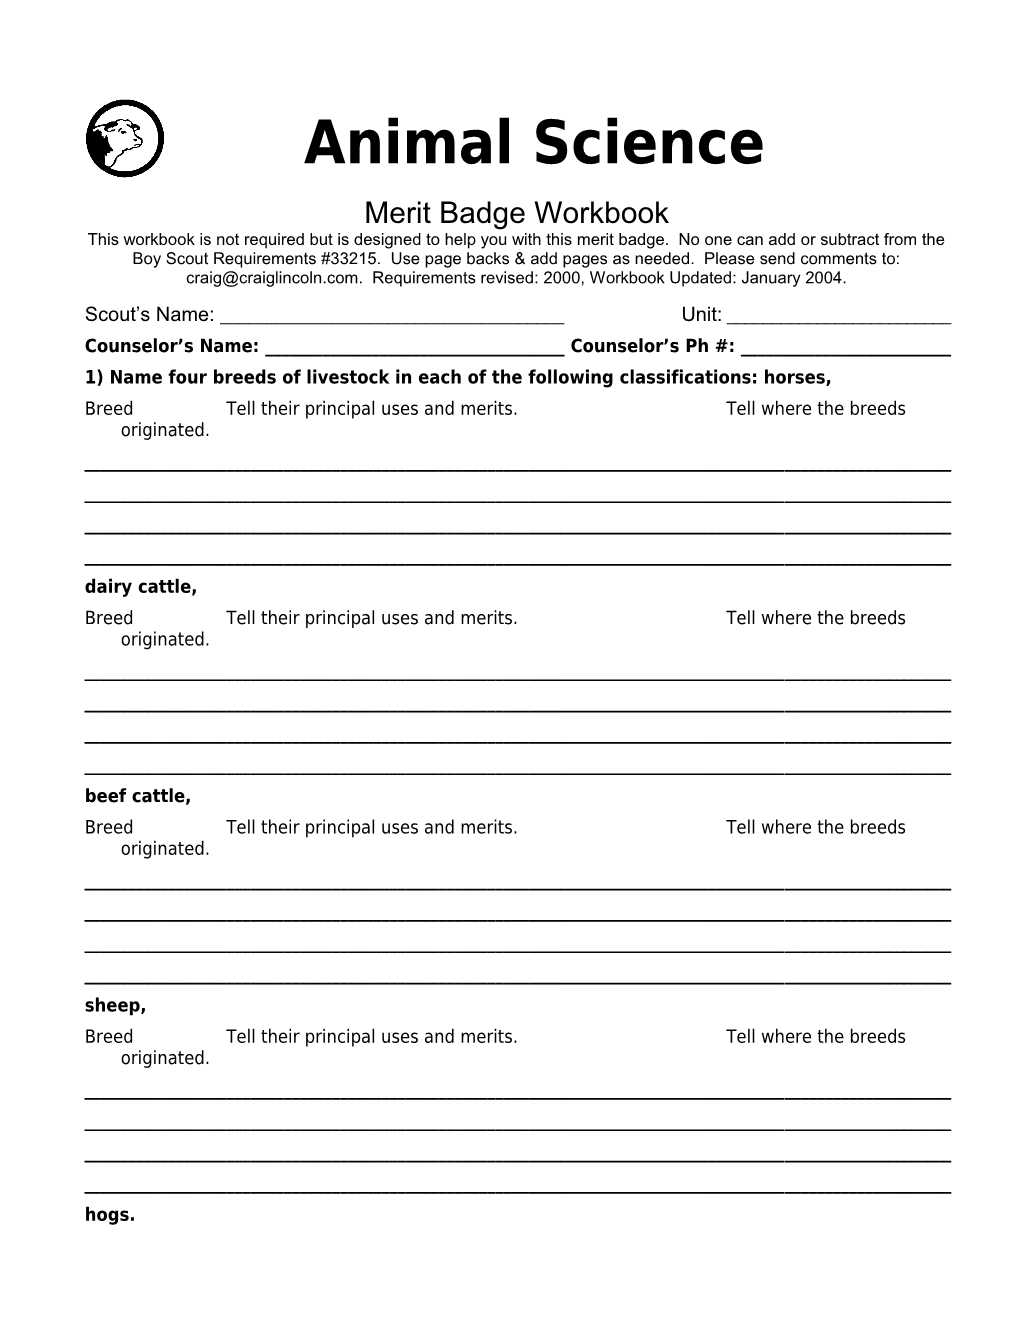 Animal Science P. 5 Merit Badge Workbook Scout's Name: ______